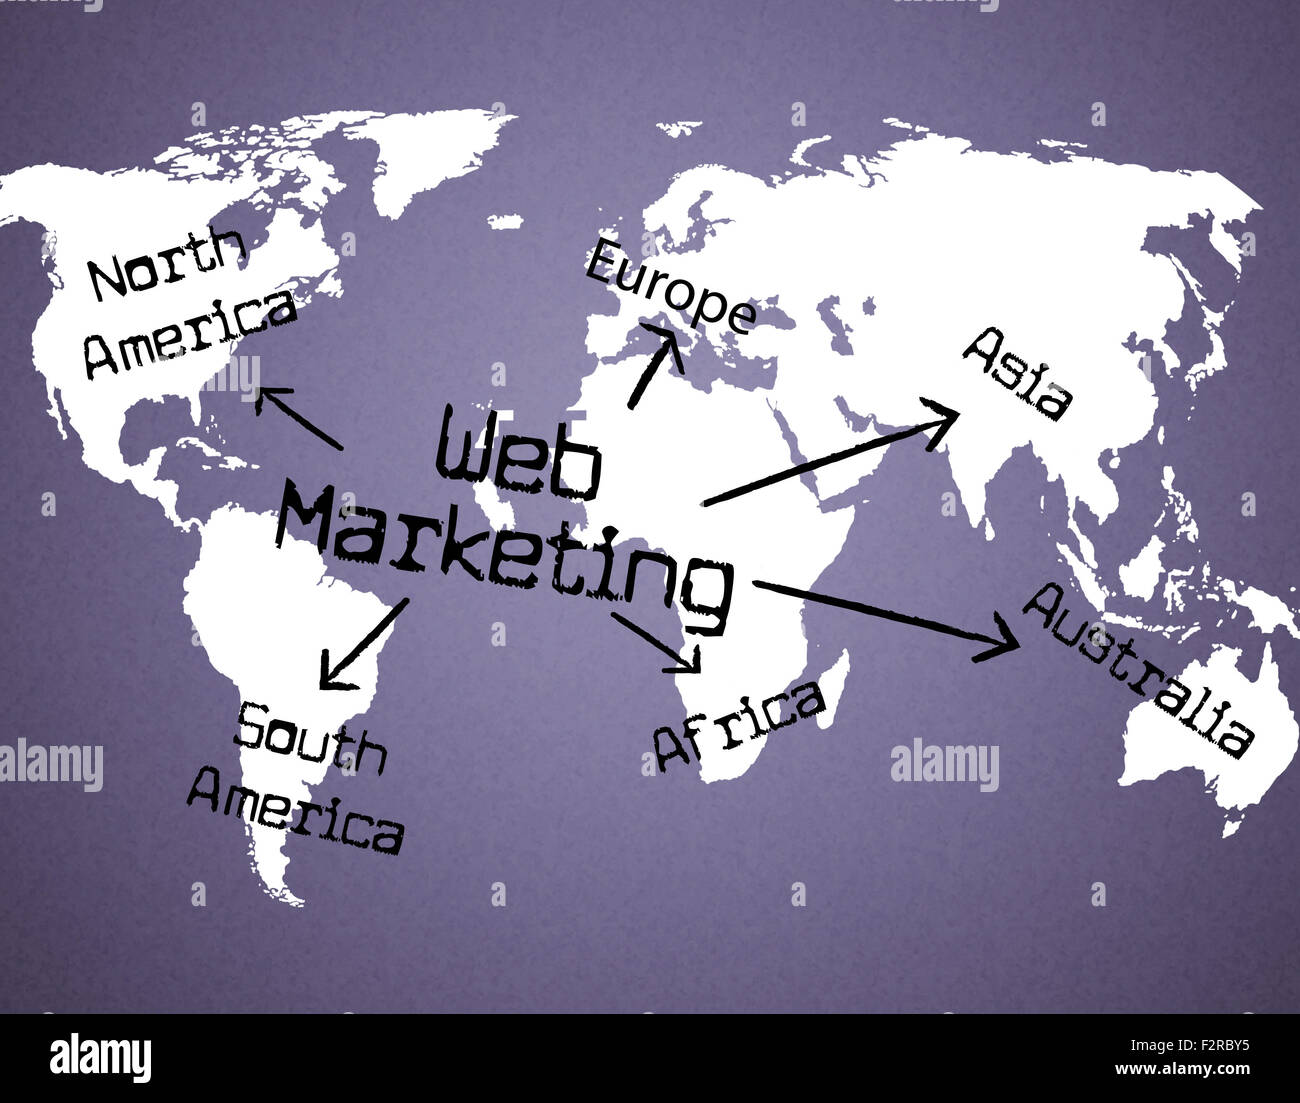 Web Marketing Indicating Advertising Websites And Promotions Stock Photo